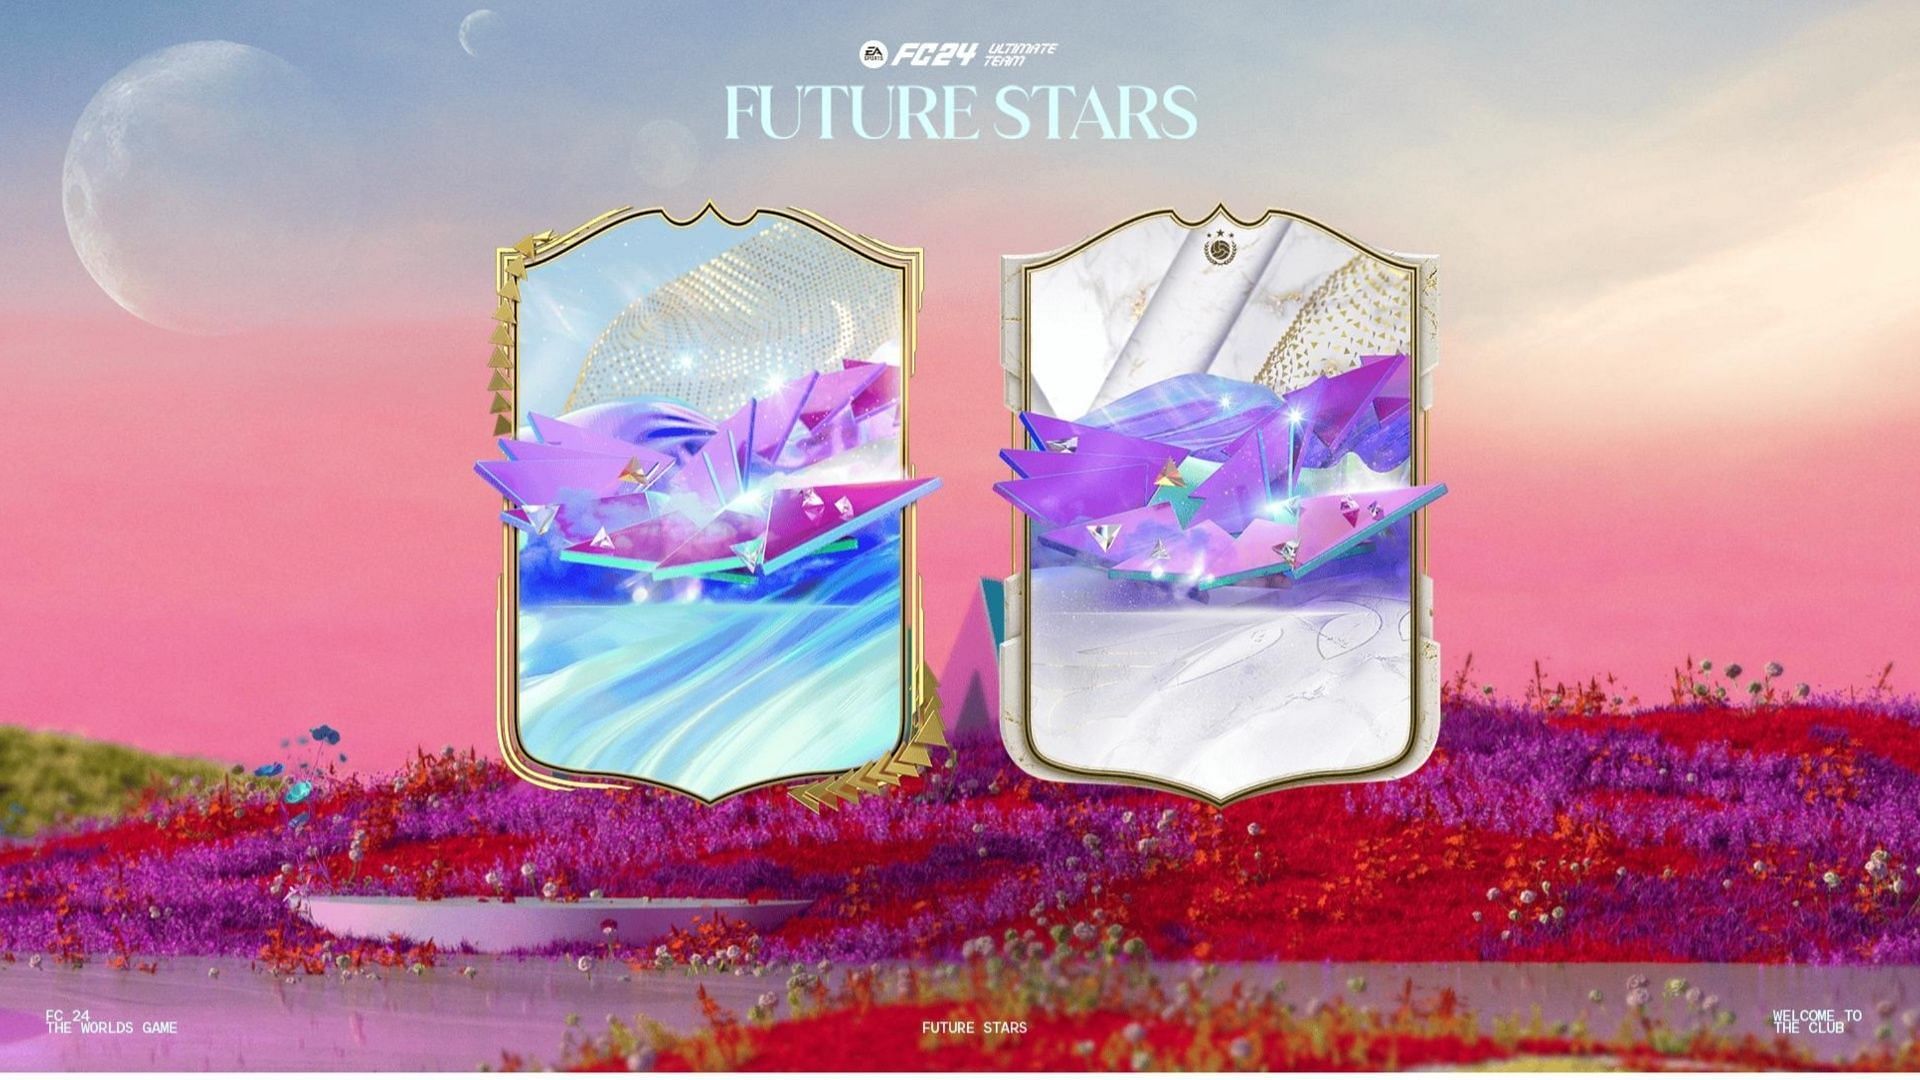 EA FC 24 Future Stars promo release date and time